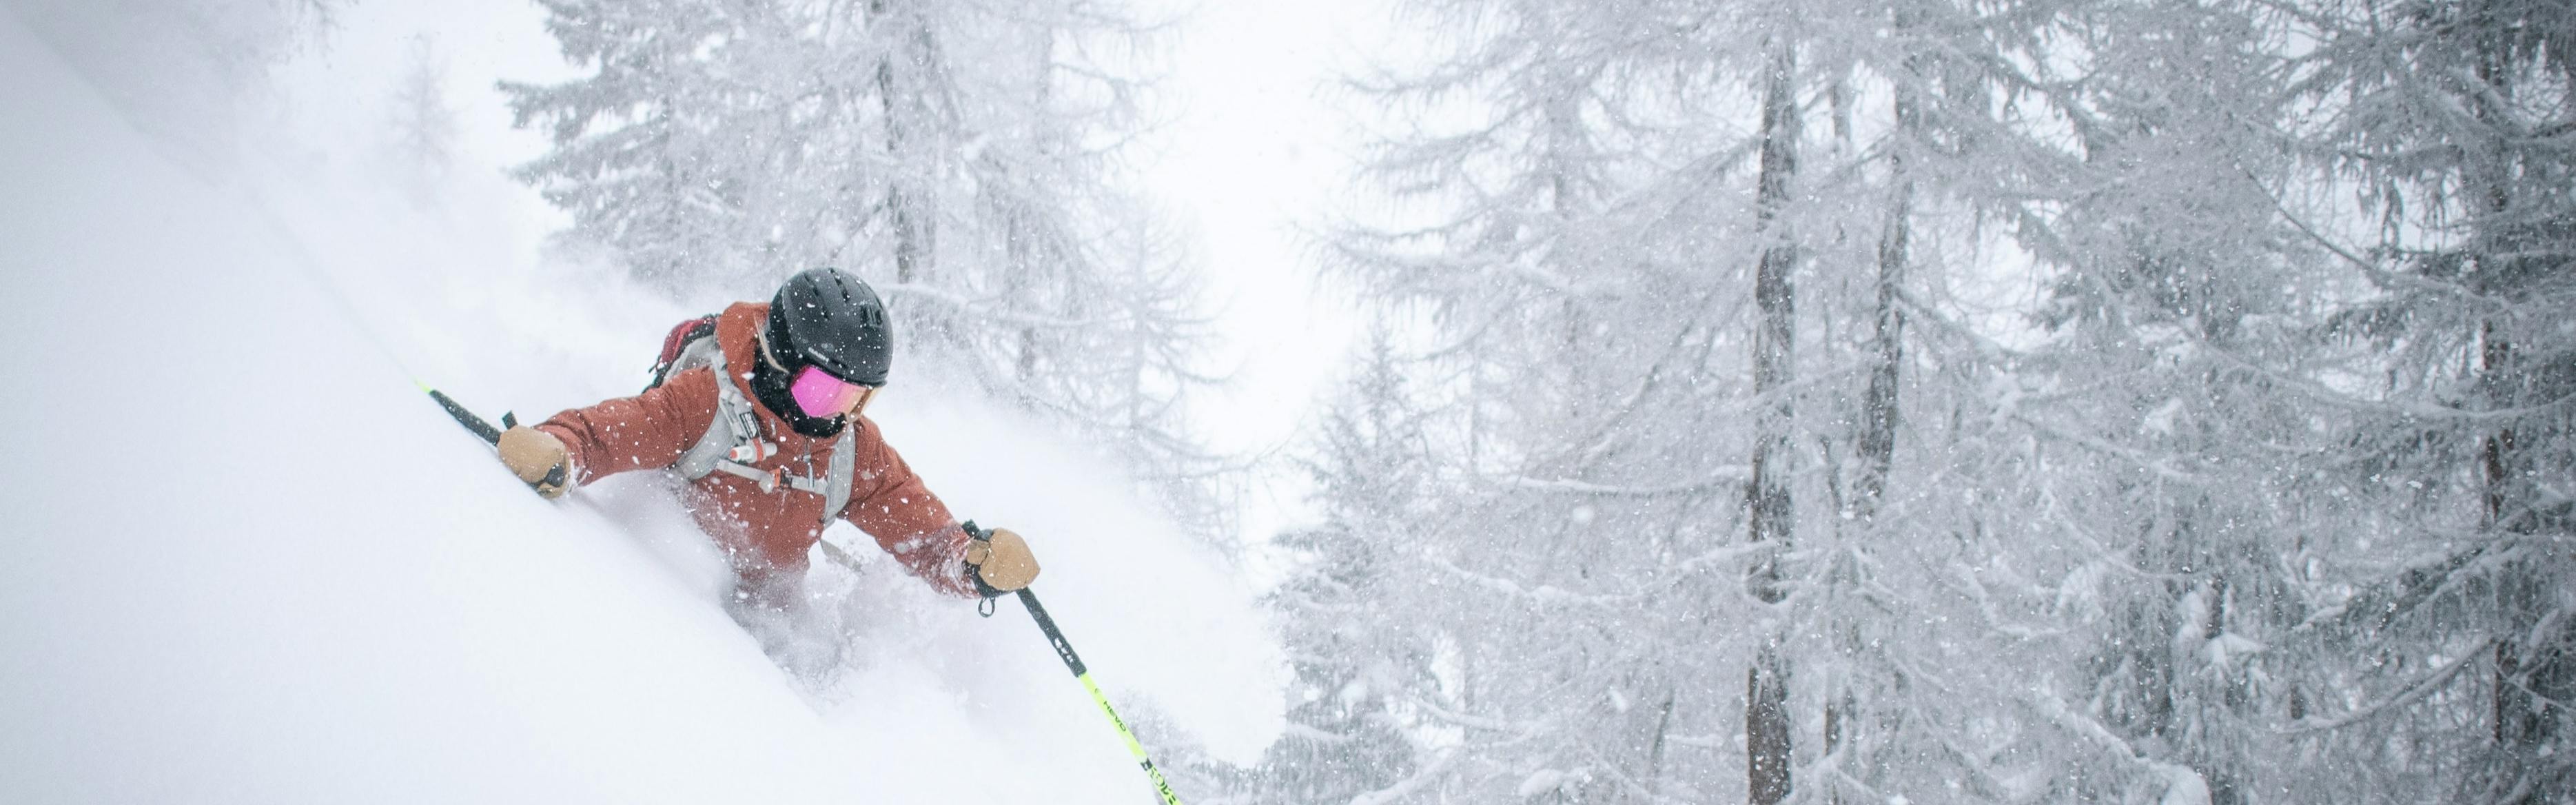 A skier in an orange jacket skis some deep powder.